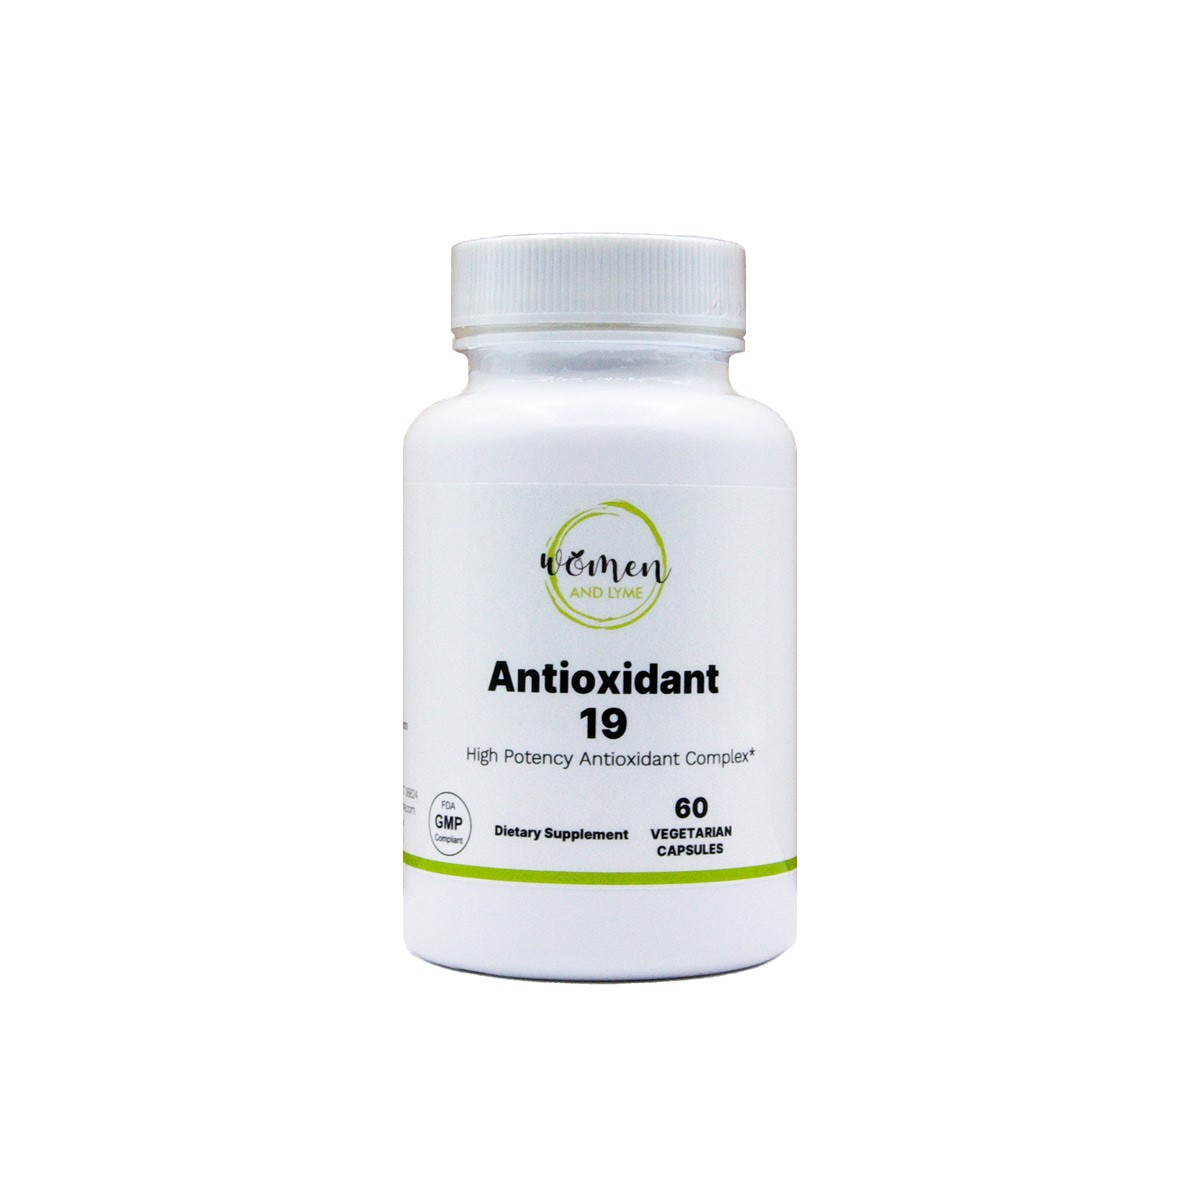 Antioxidant 19